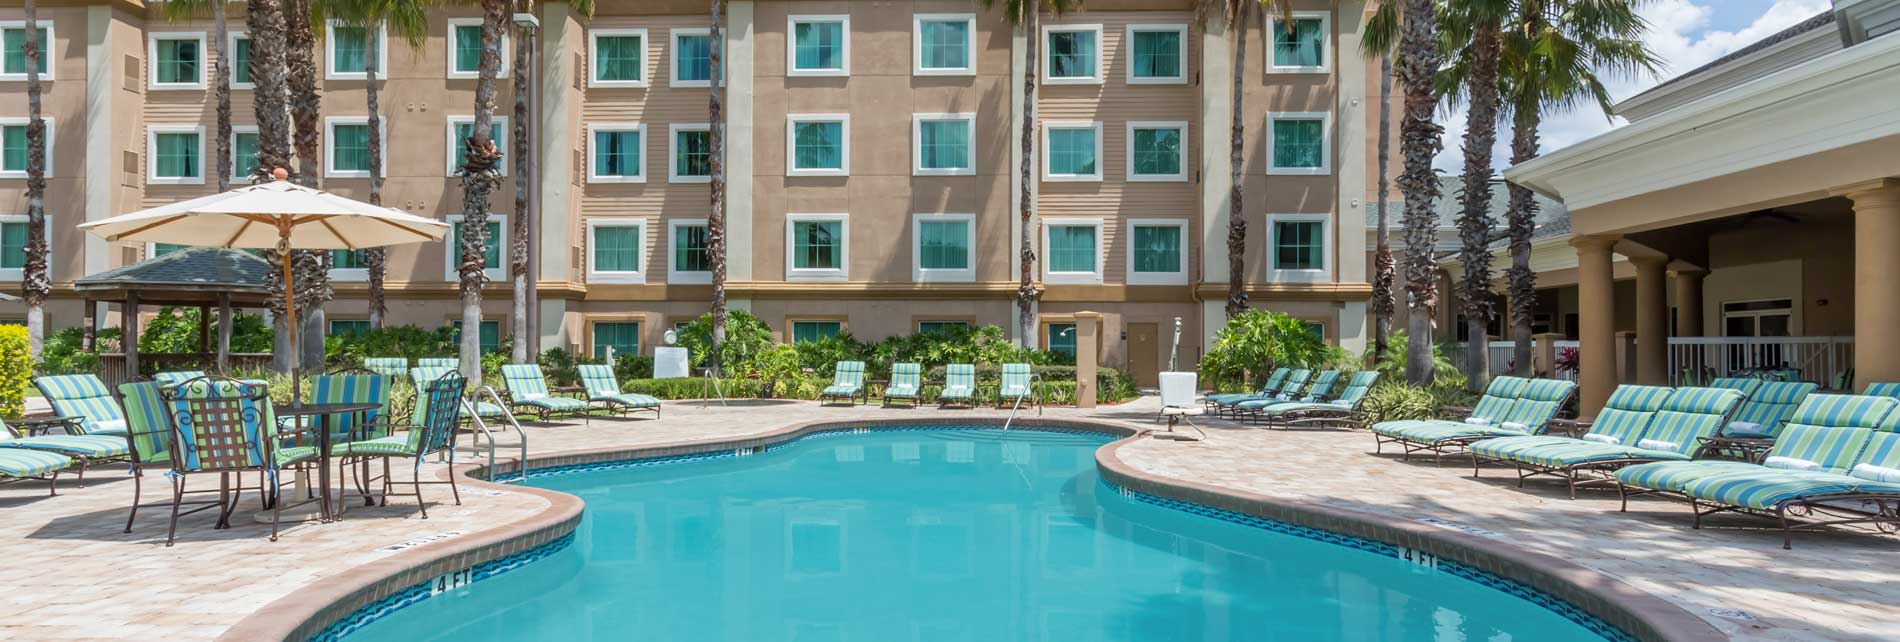 Contact Details Orlando Hotels Hawthorn Suites Lake Buena Vista